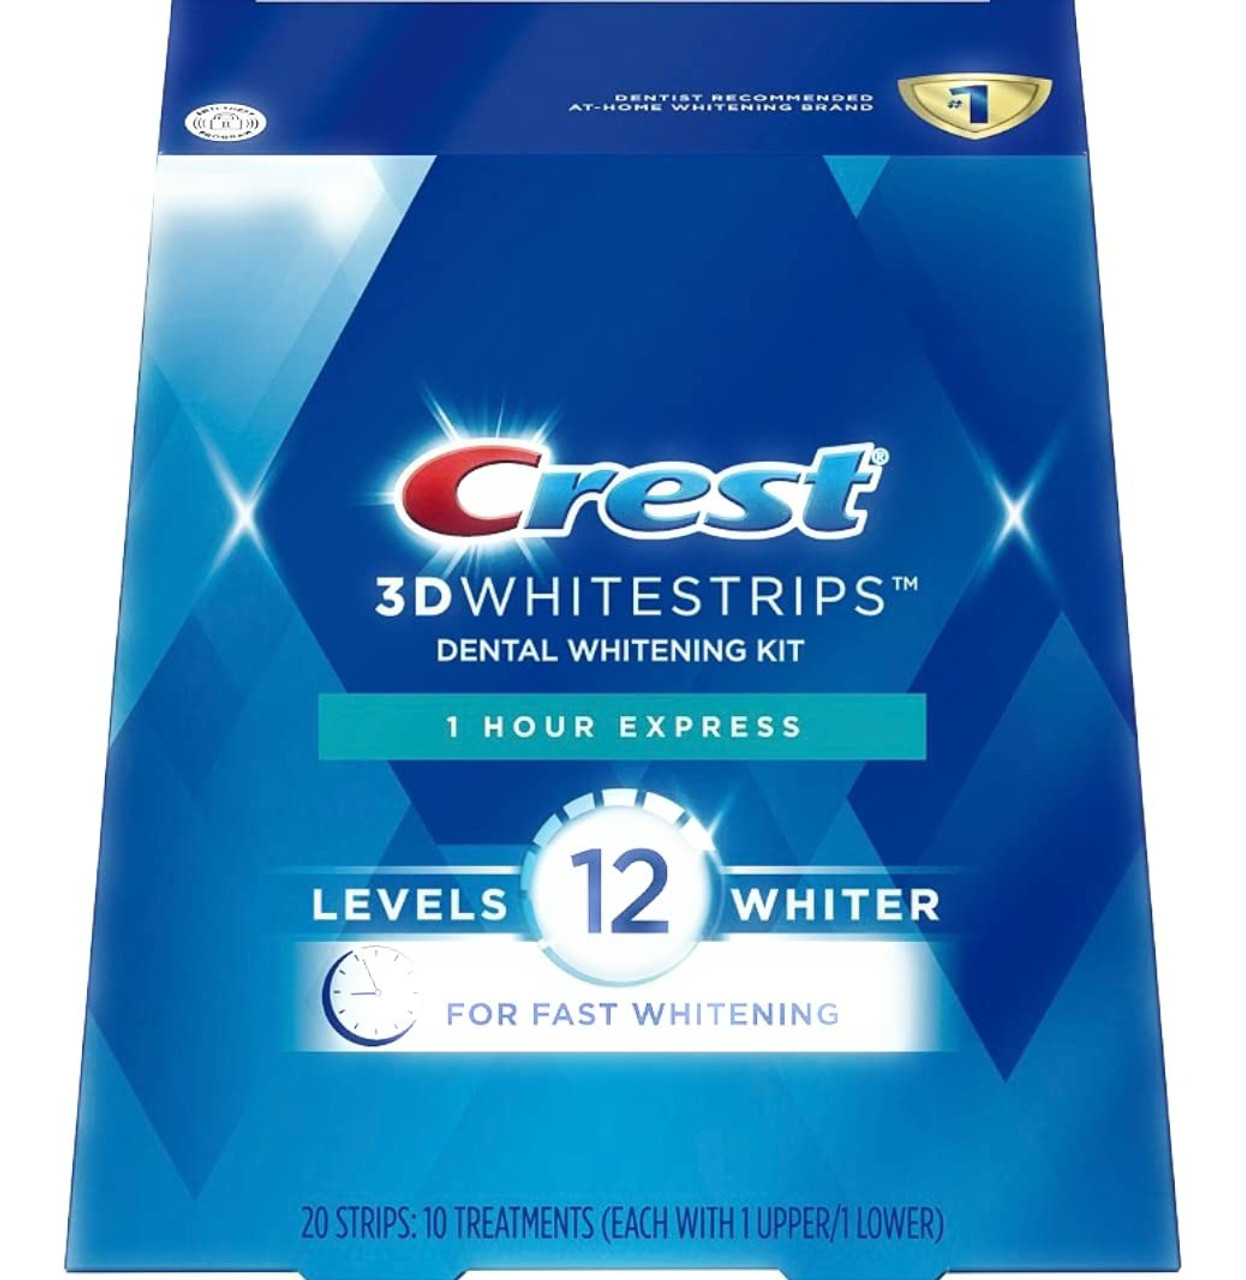 Crest 3D Whitestrips Professional Effects + Bonus 1 Hour Express